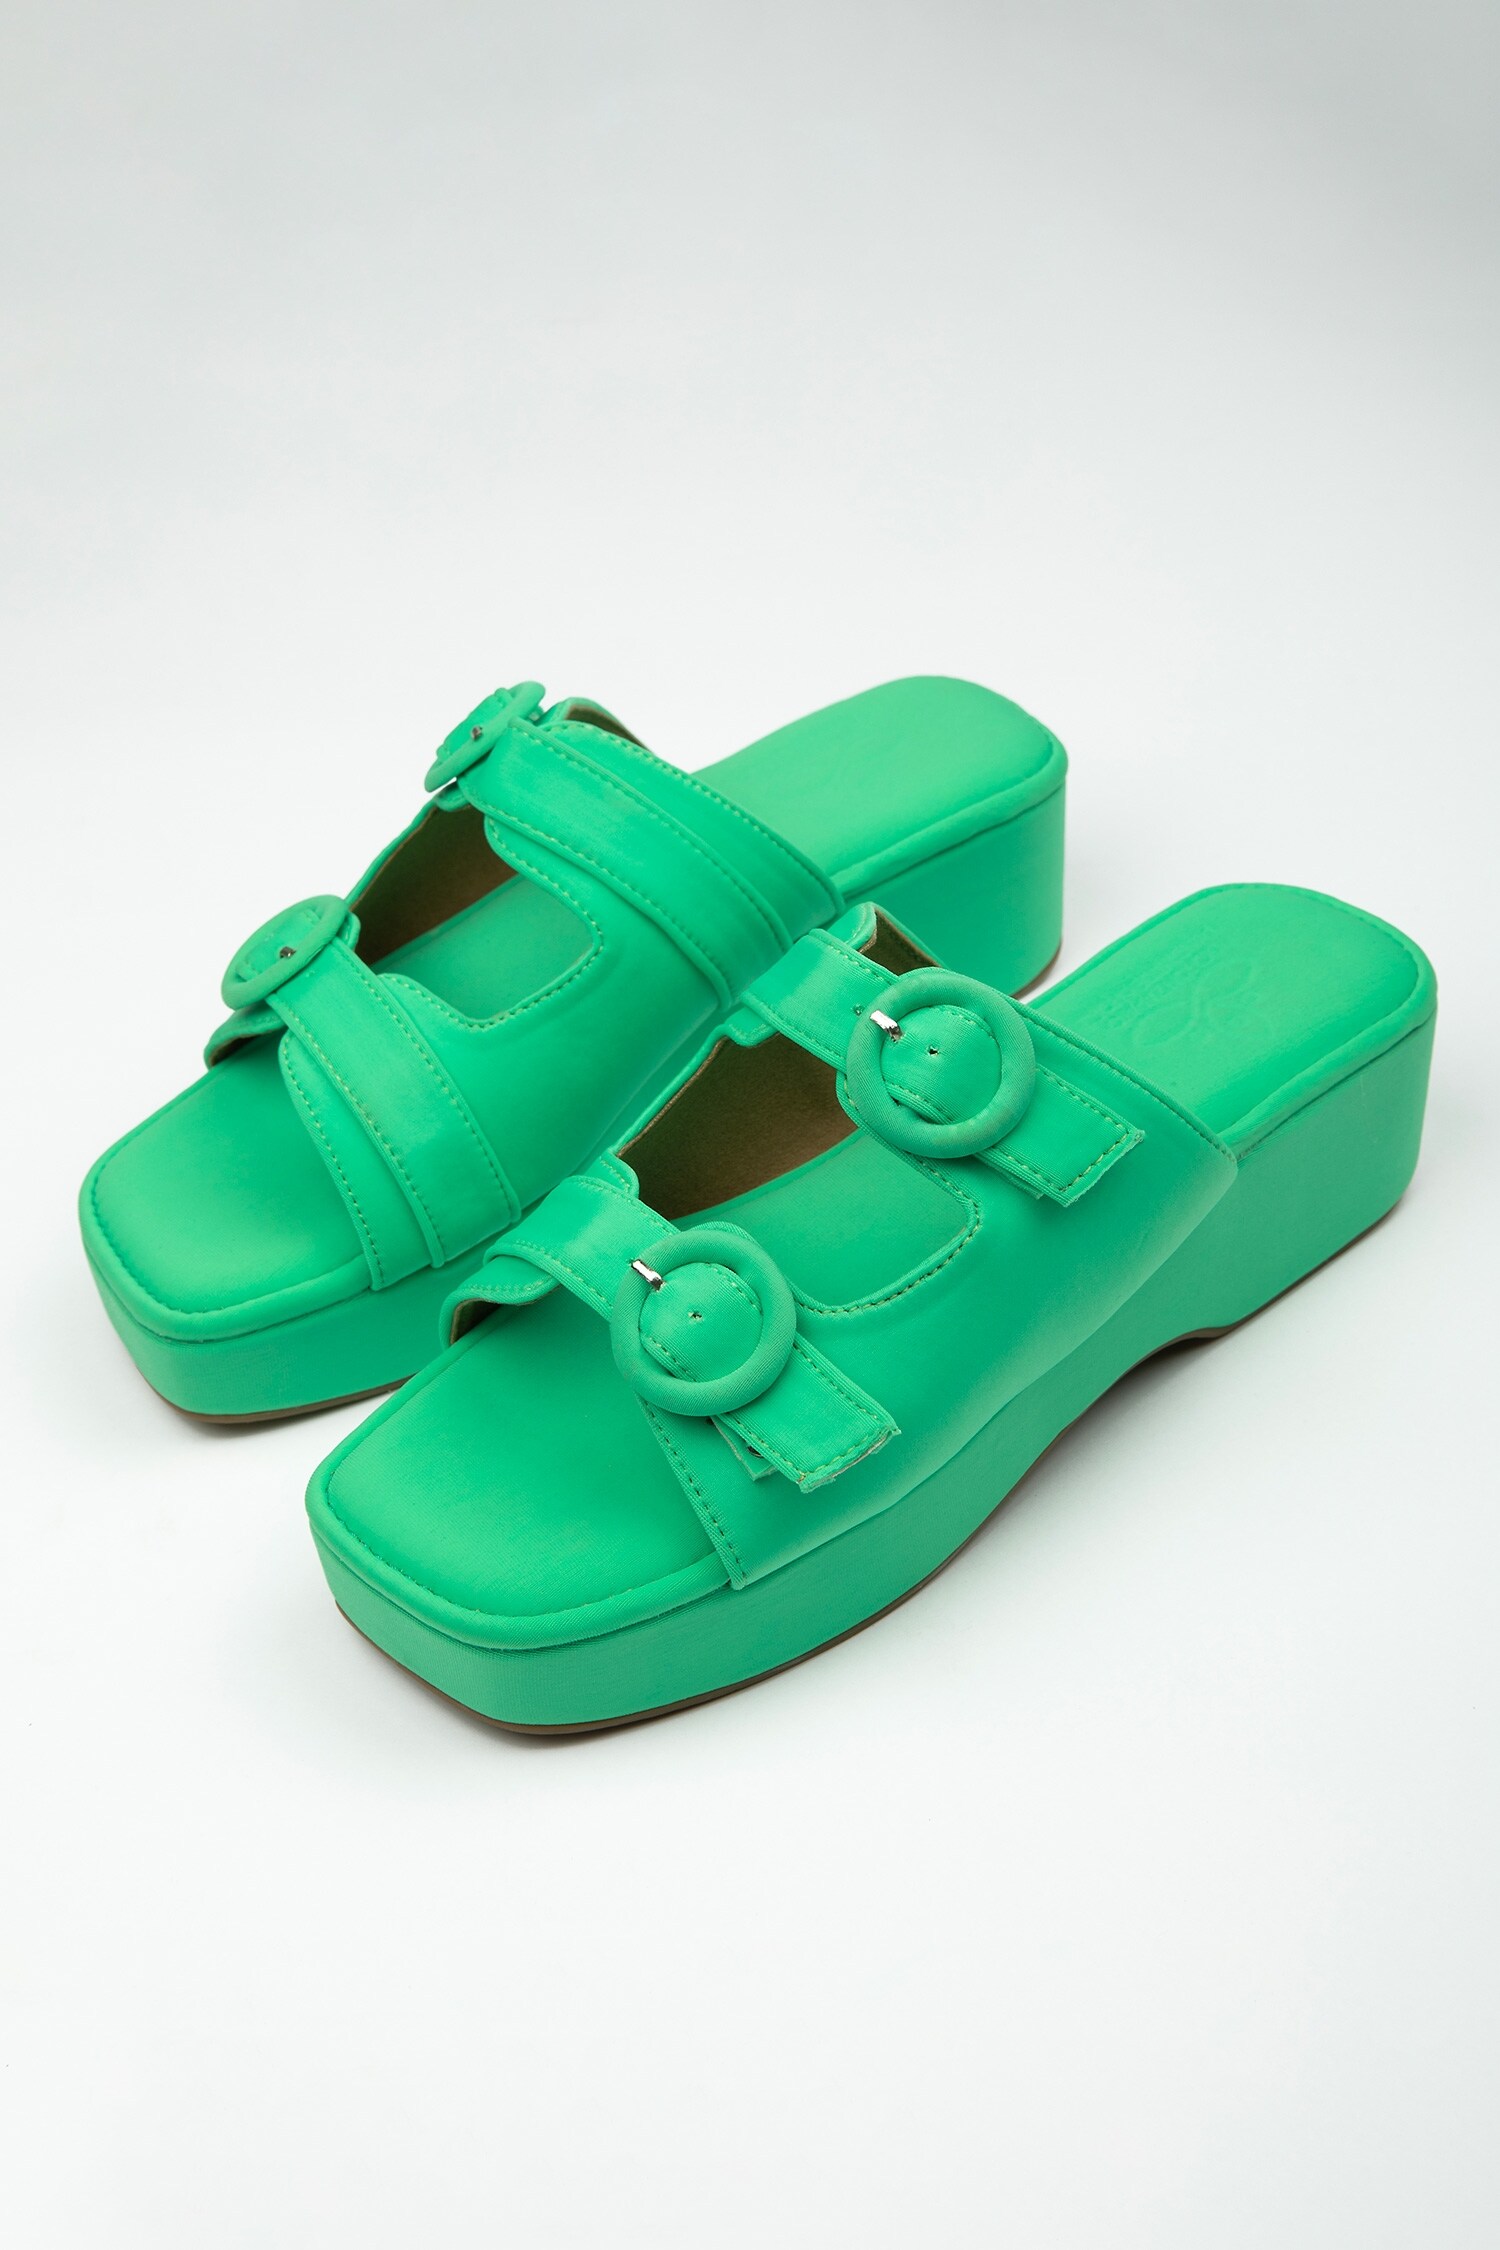 Schon Zapato Green Vegan Leather Buckle Strap Platform Heels